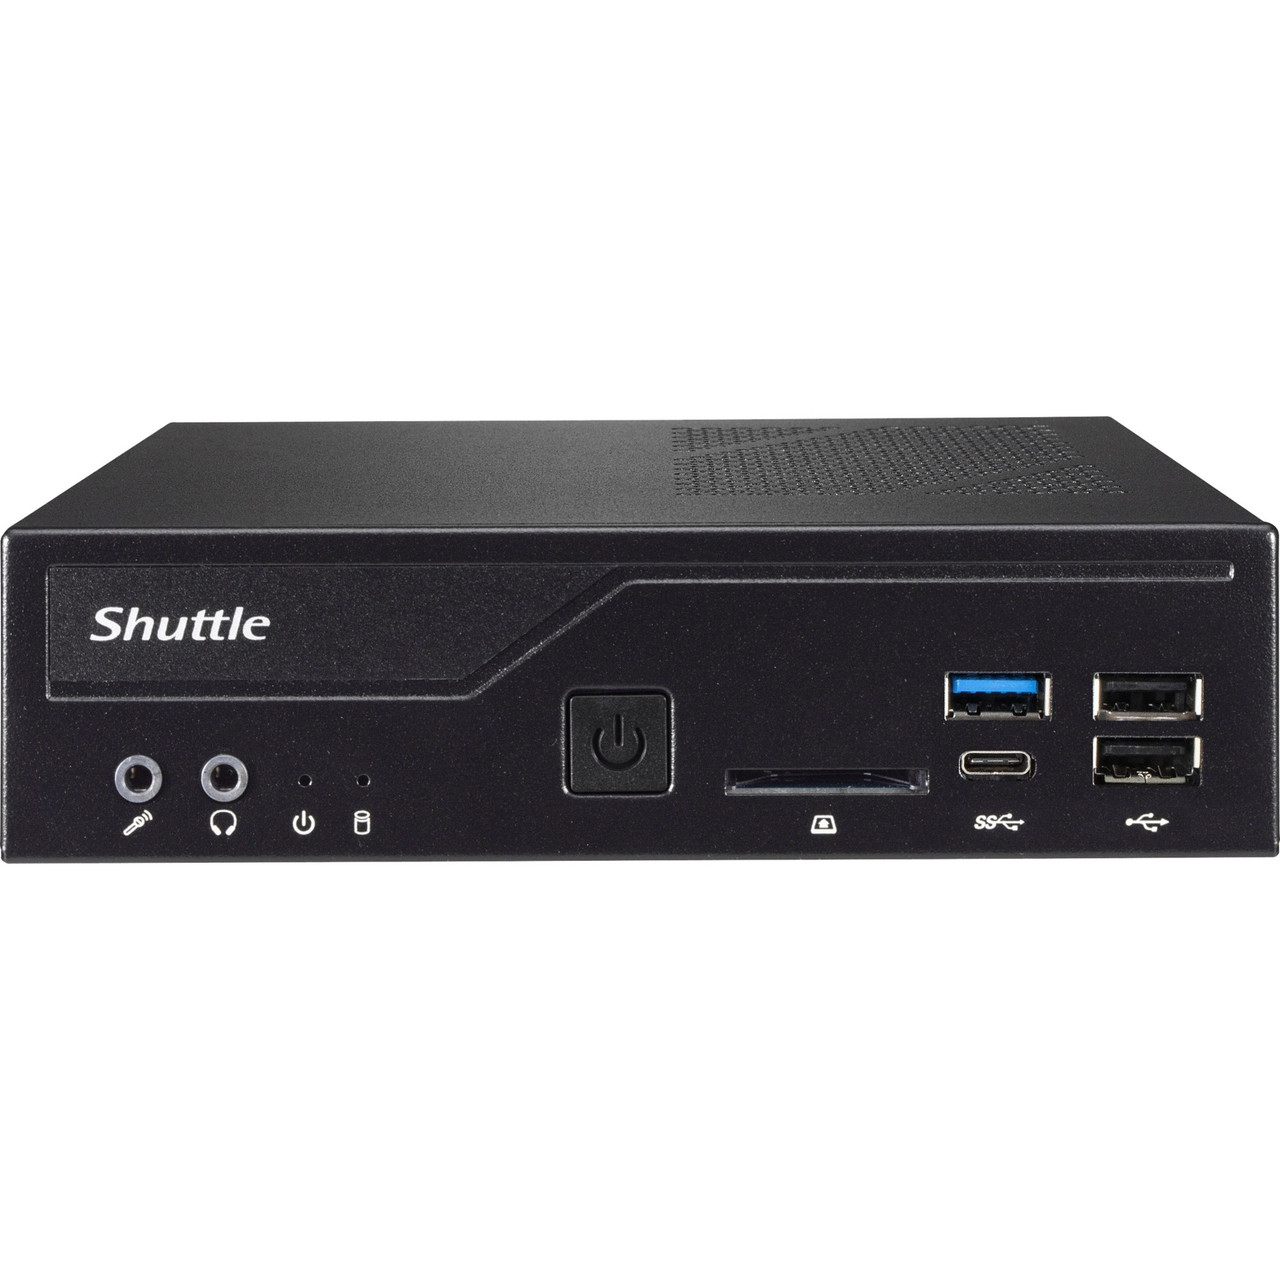 Shuttle XPC slim DH310S Barebone System - Slim PC - Socket H4 LGA-1151 - 1 x Processor Support - DH310S